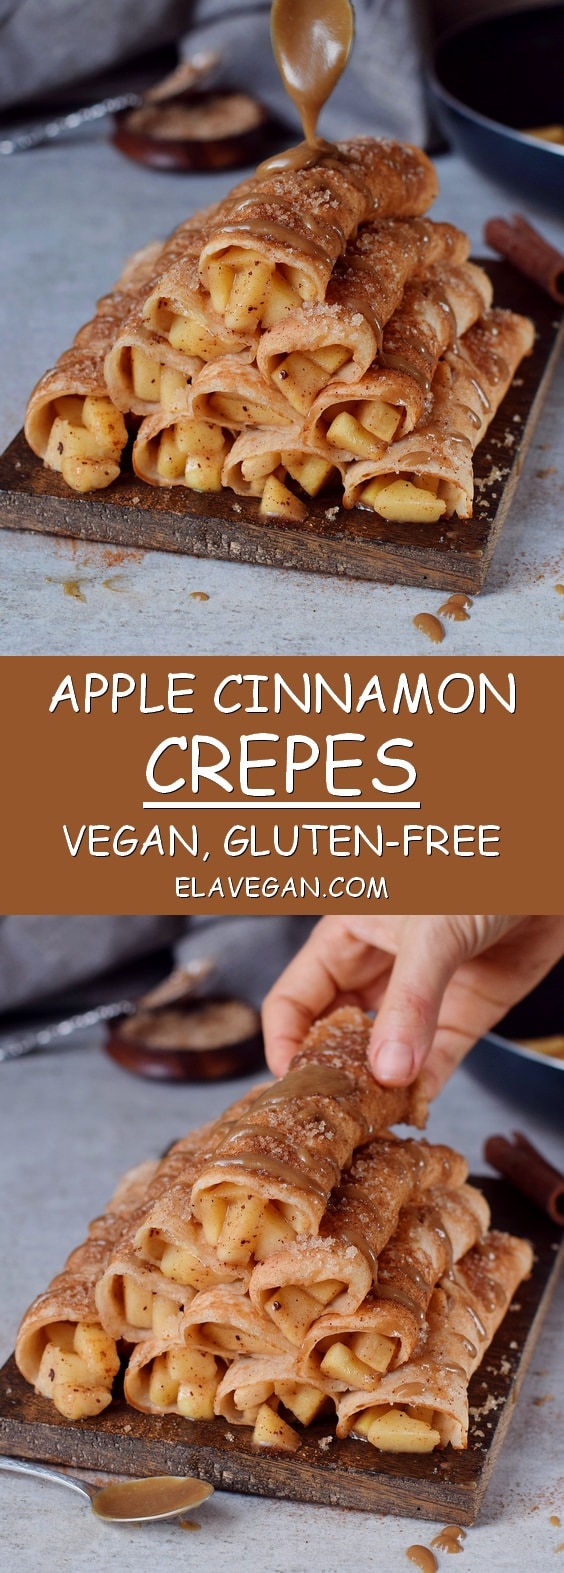 Apple cinnamon crepes | vegan, gluten-free recipe - Elavegan